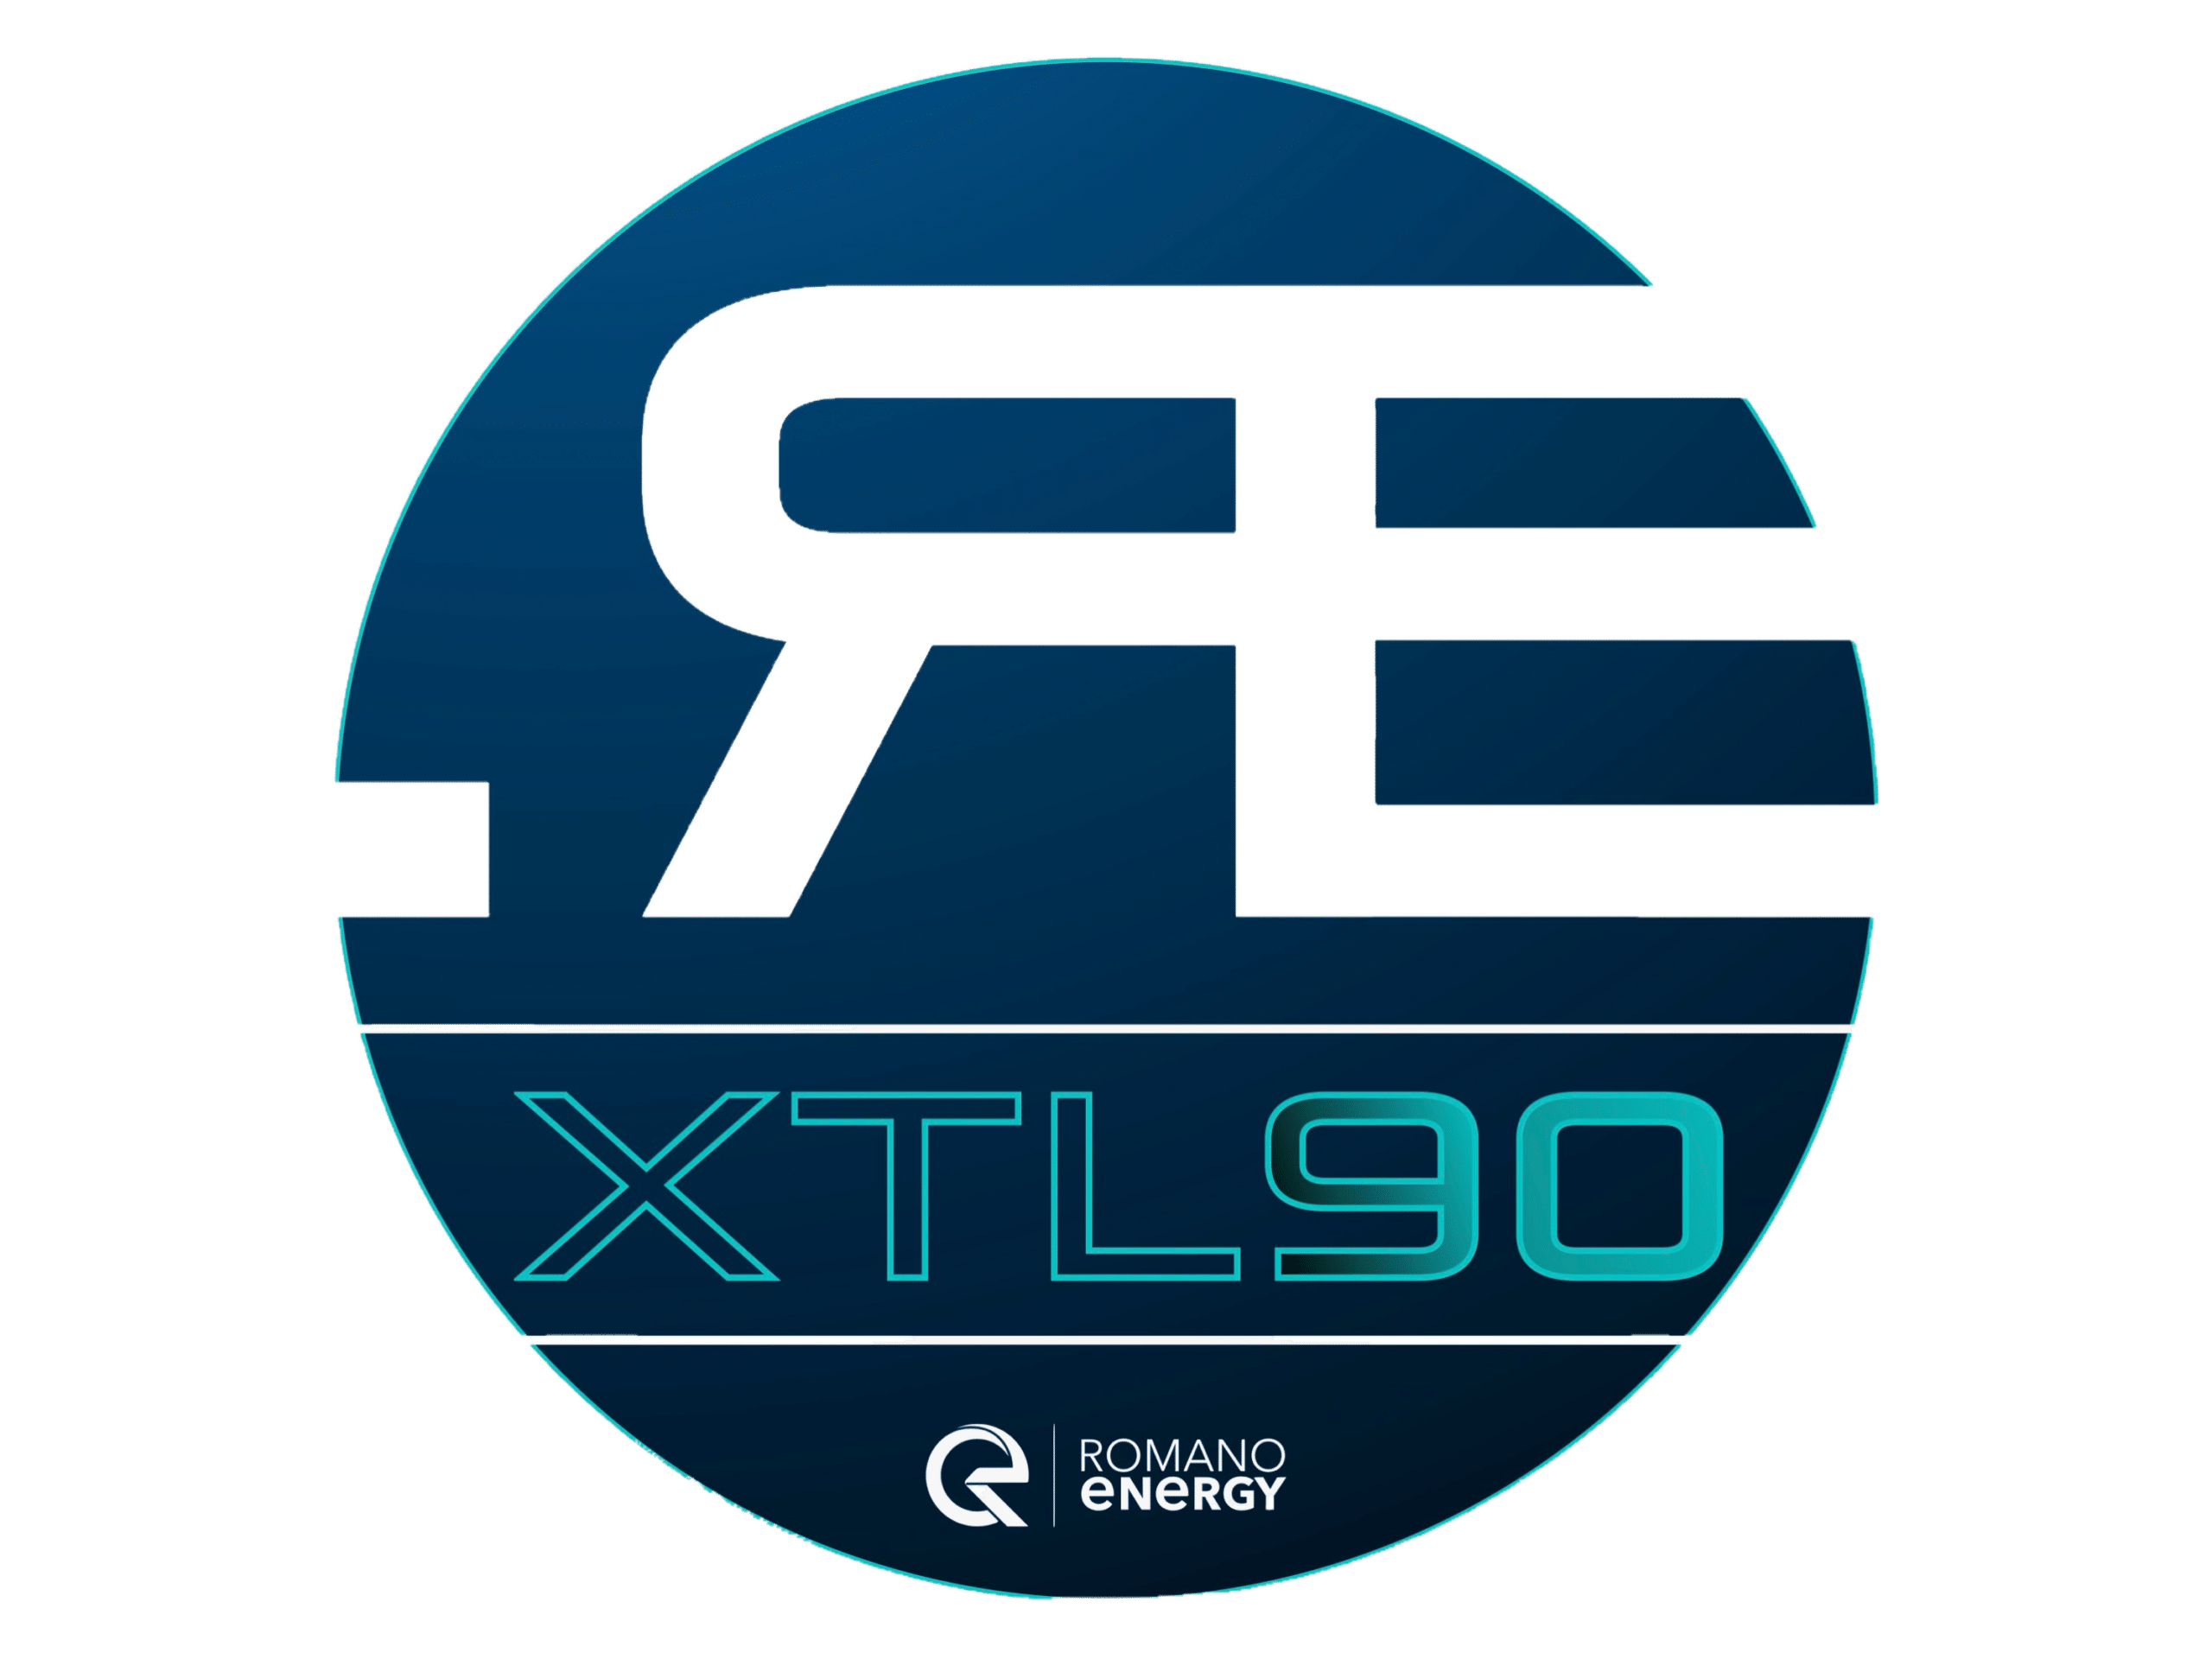 XTL 90
Carburant de Synthese